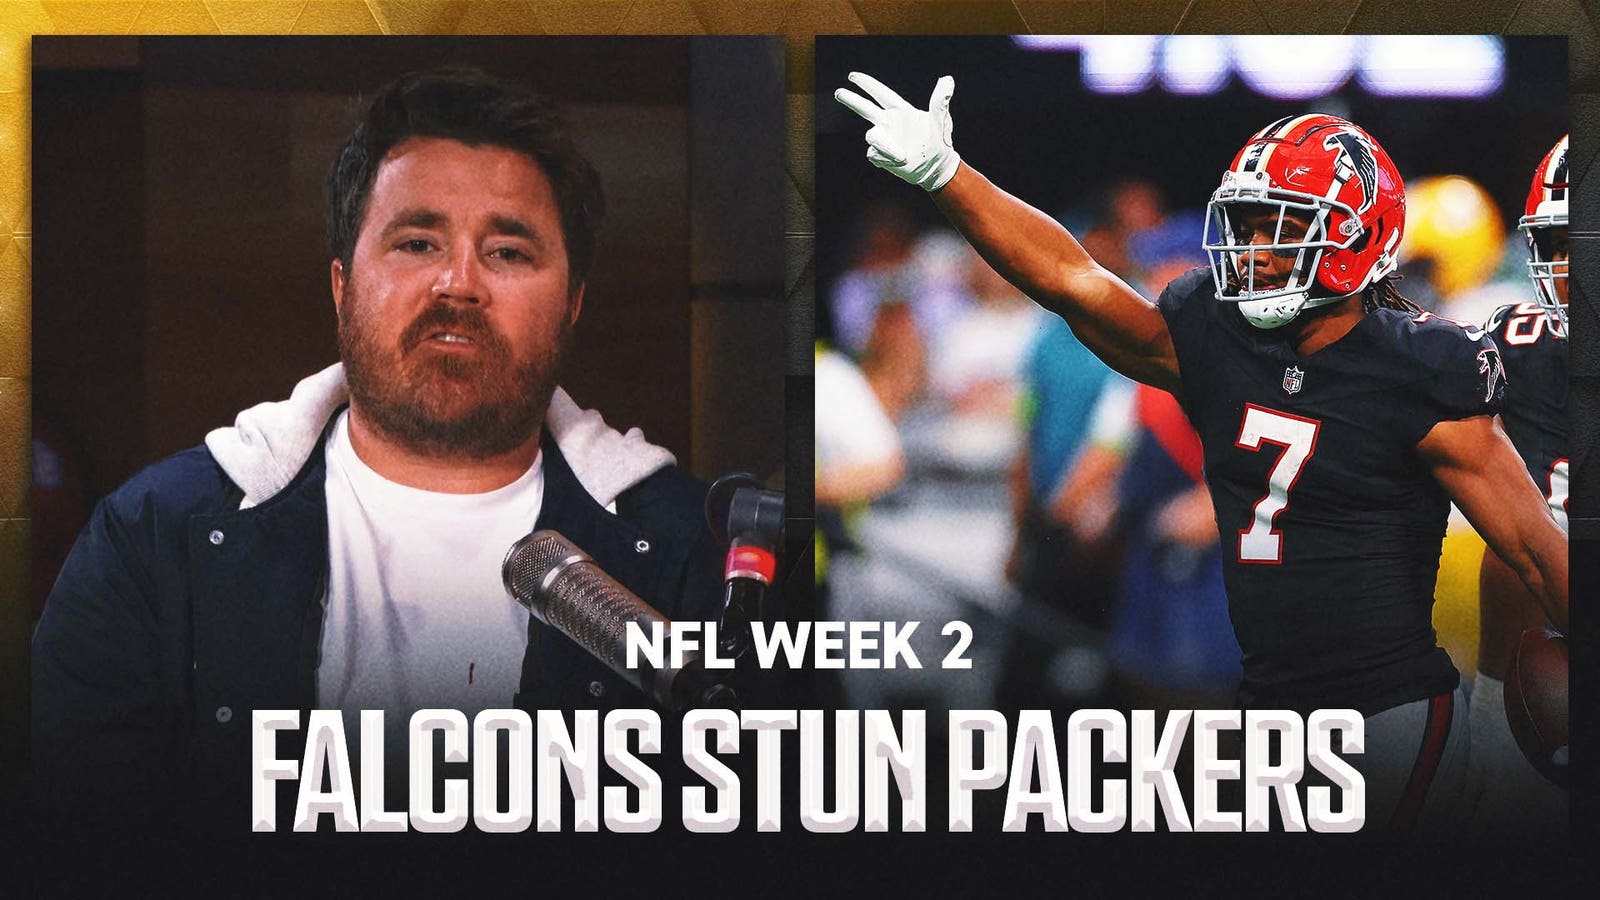 David Helman analyzes Bijan Robinson, Falcons' Week 2 win over Packers